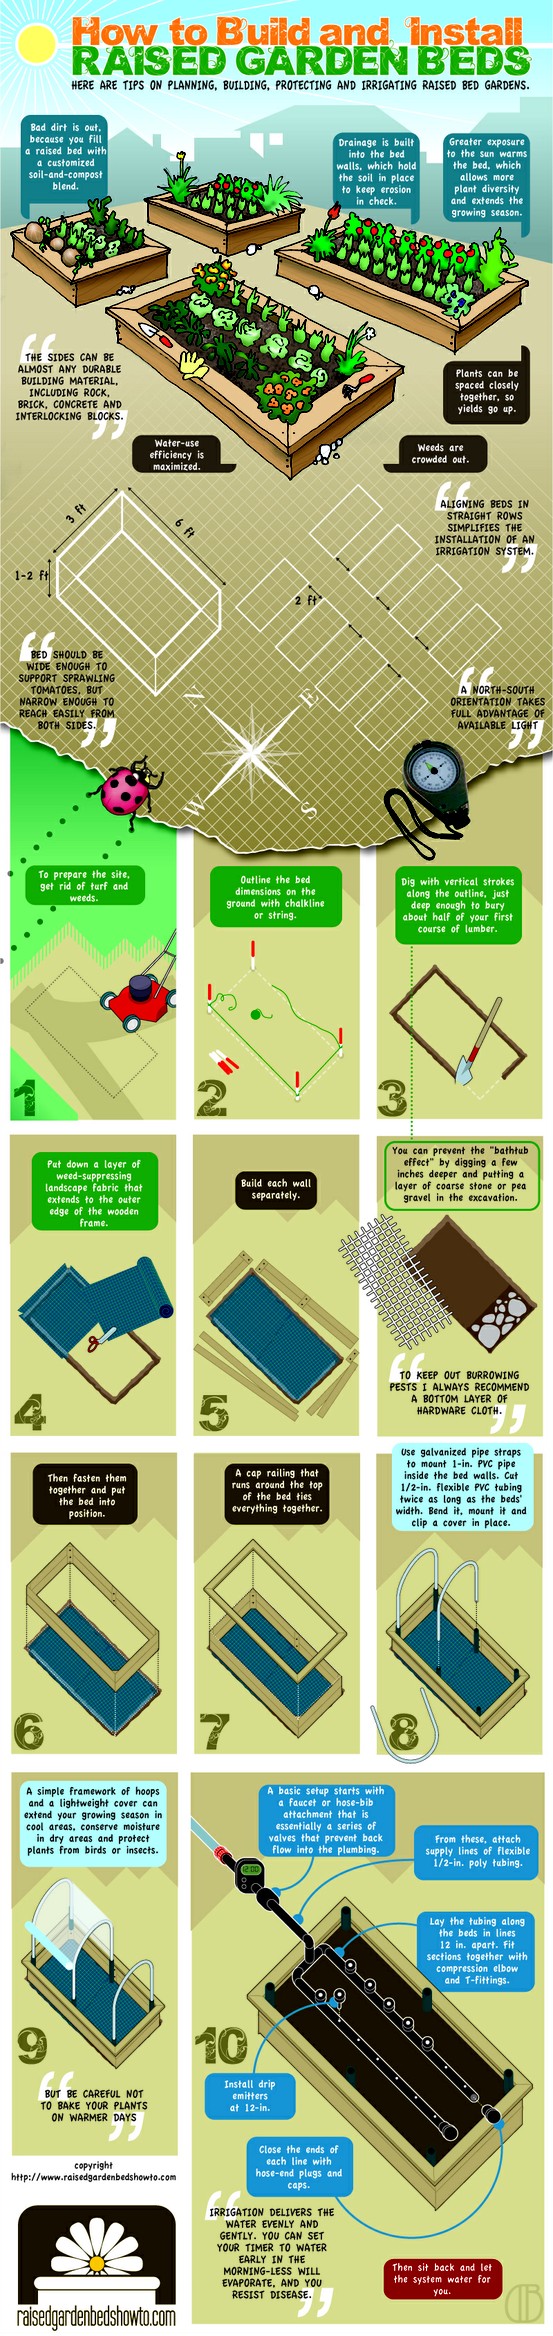 how to build raised garden